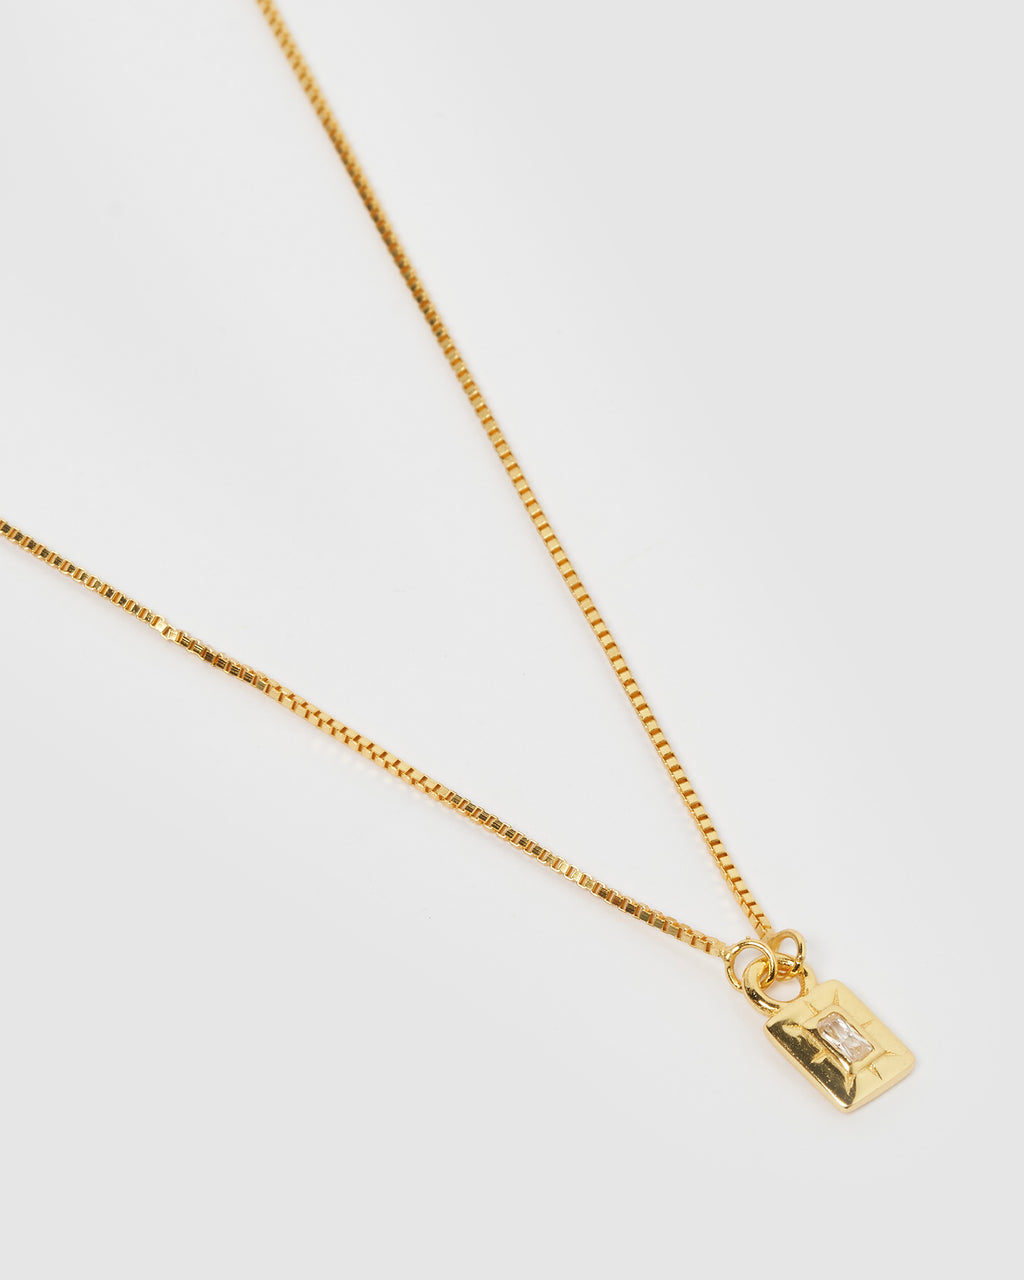 Izoa Cairo Necklace Gold Clear